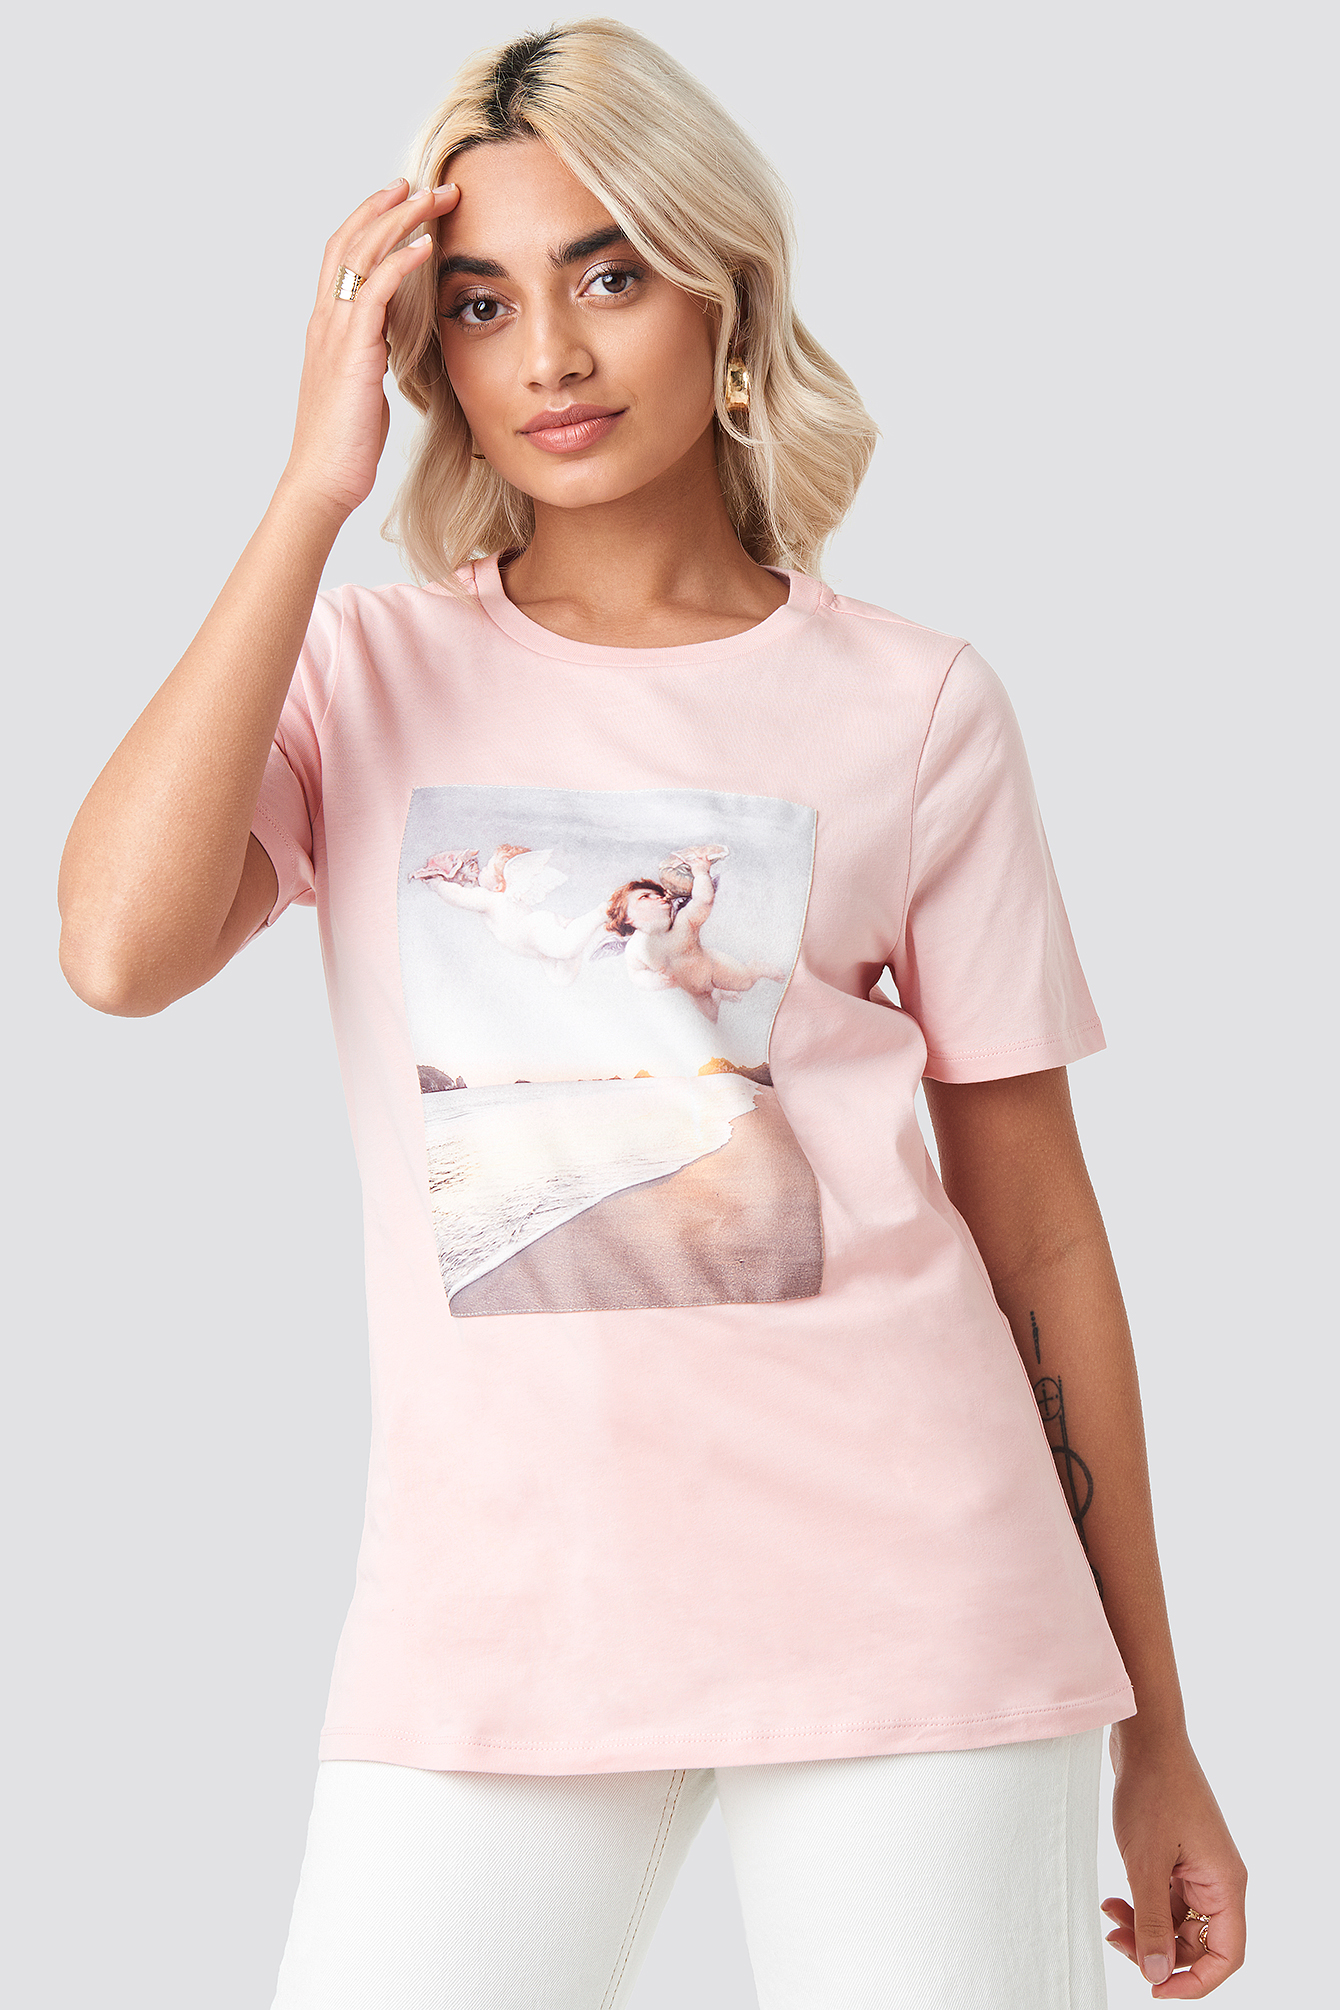 pink angel shirt